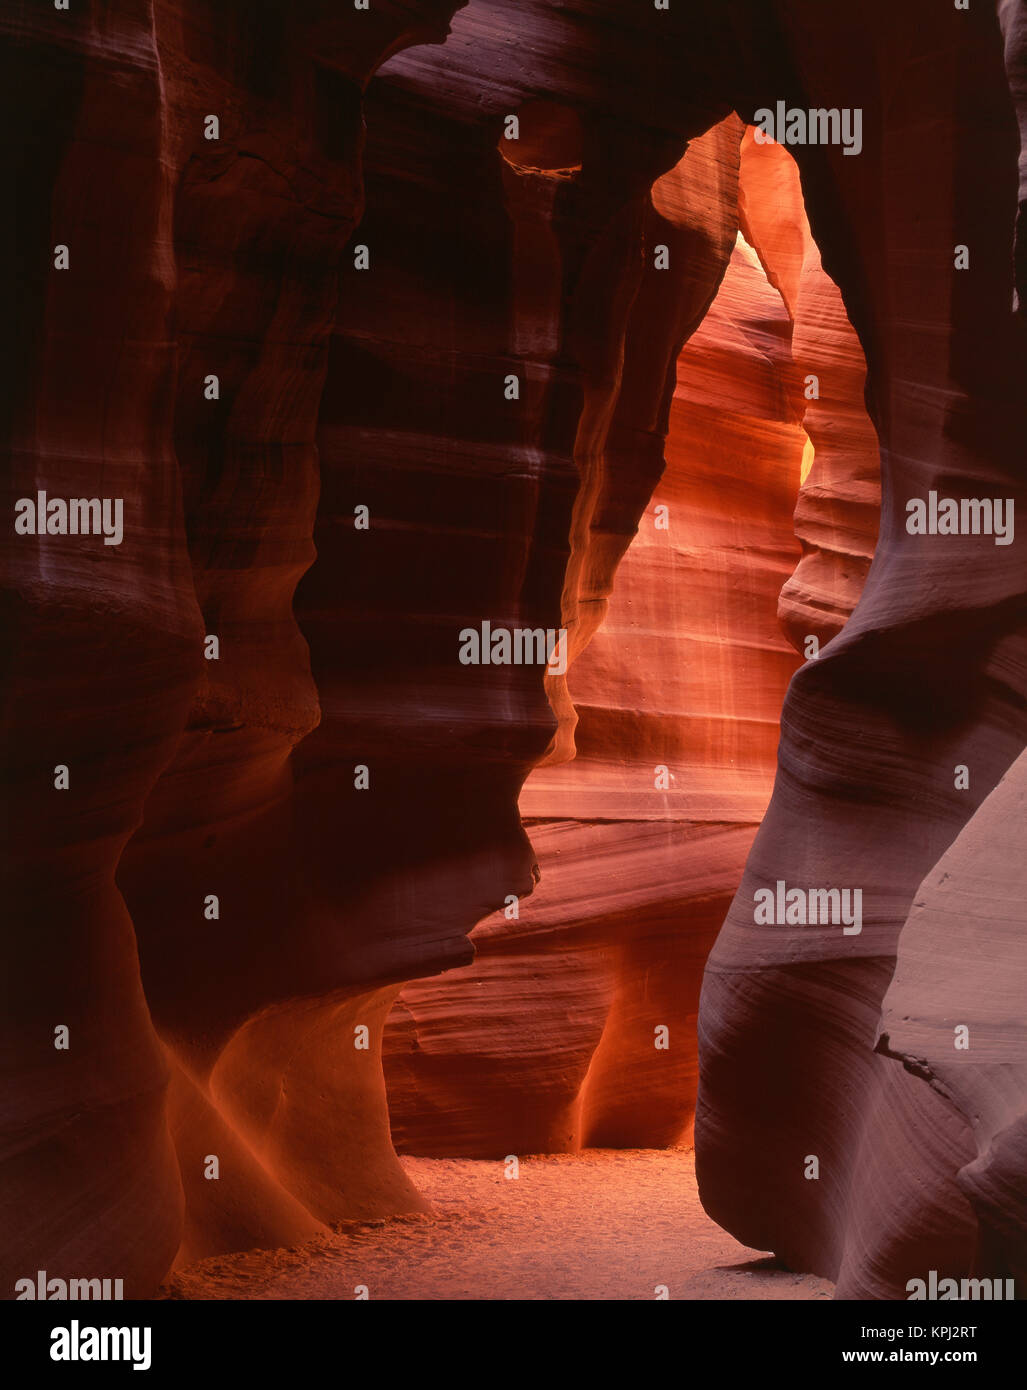 USA, Arizona, Red sandstone walls of Antelope Canyon (Large format sizes available) Stock Photo